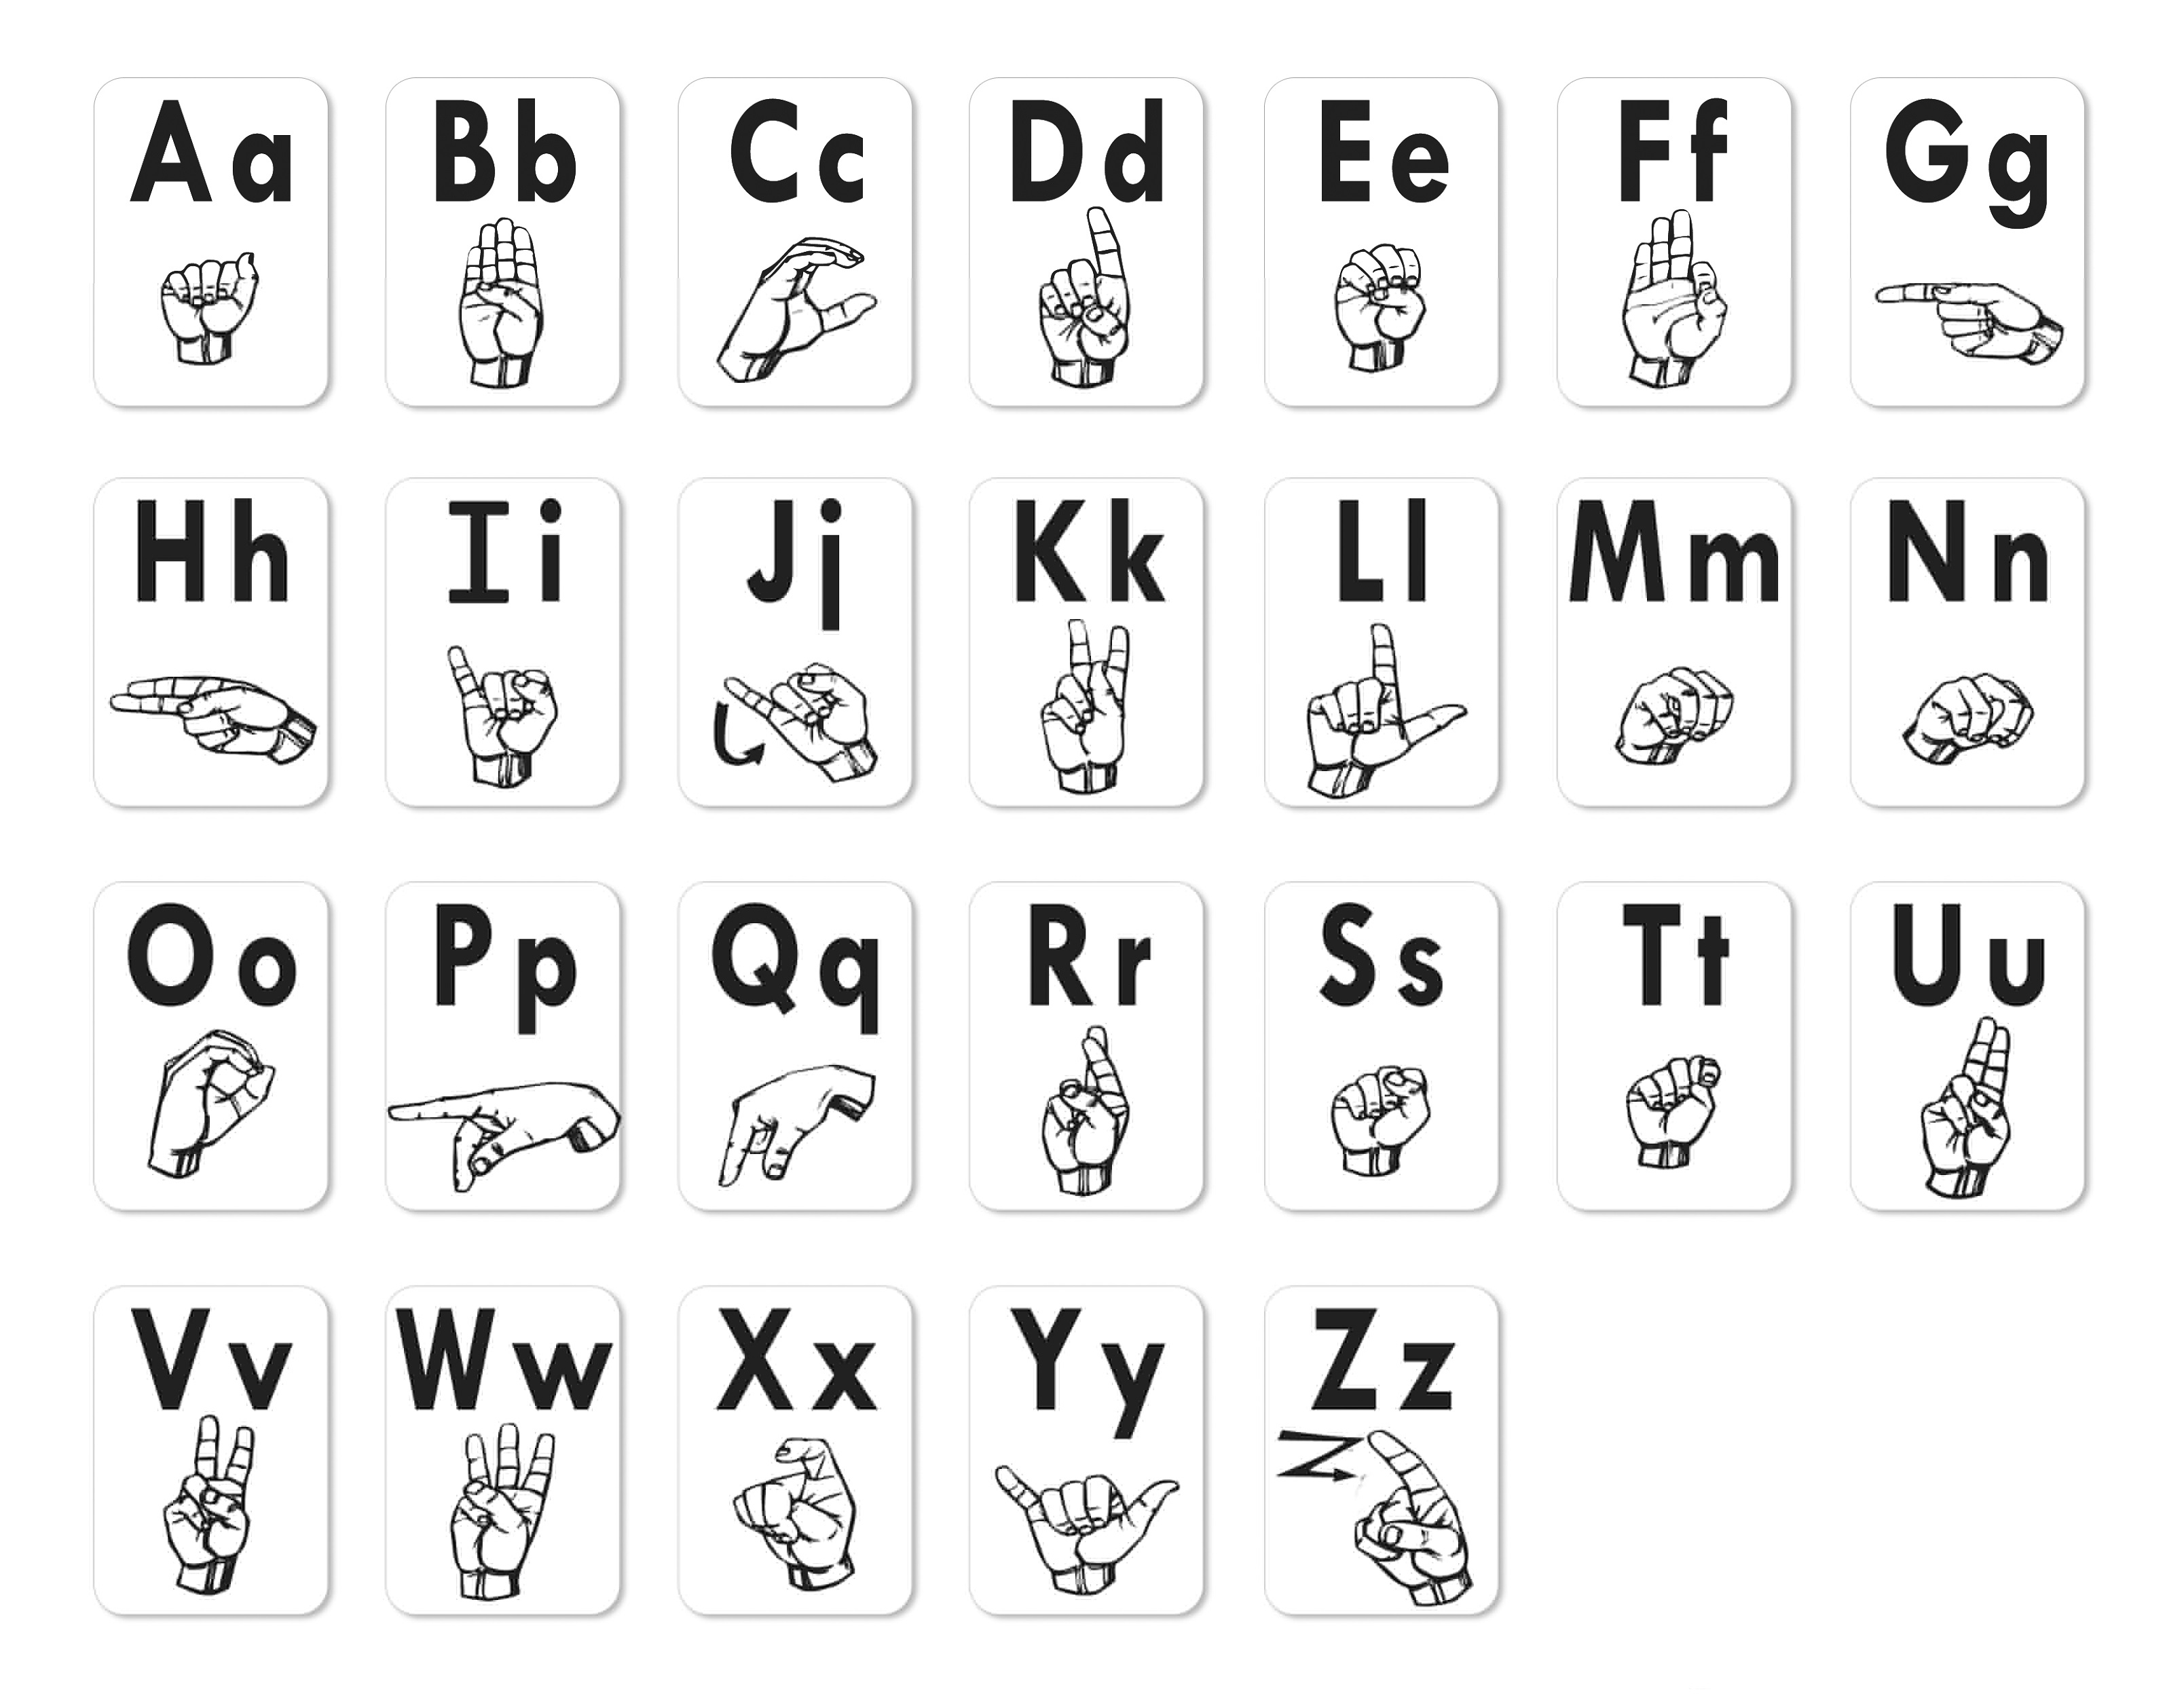 hand-sign-language-alphabet-stock-illustration-download-image-now-istock